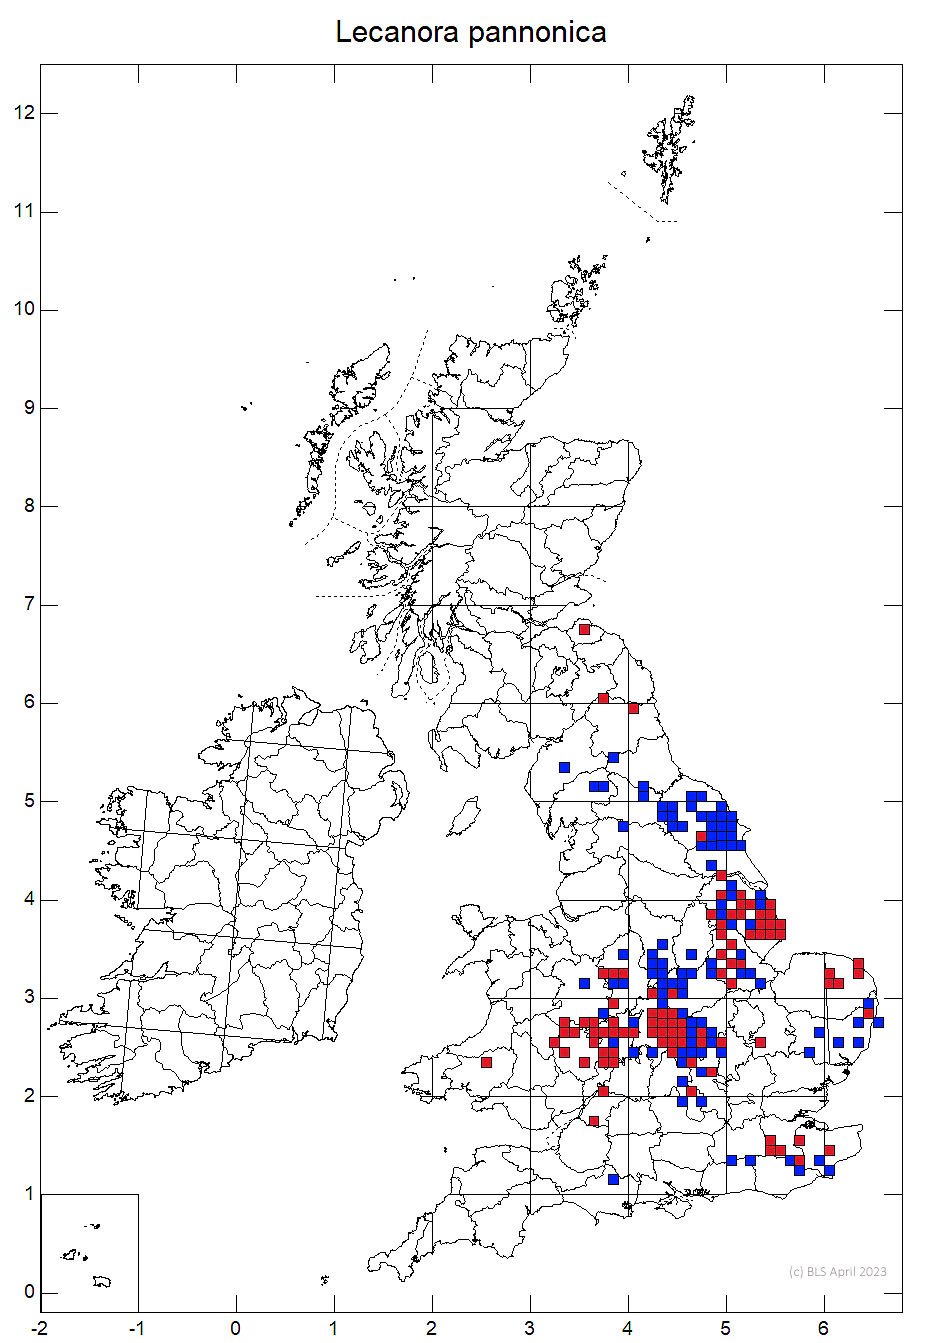 Lecanora pannonica 10km sq distribution map